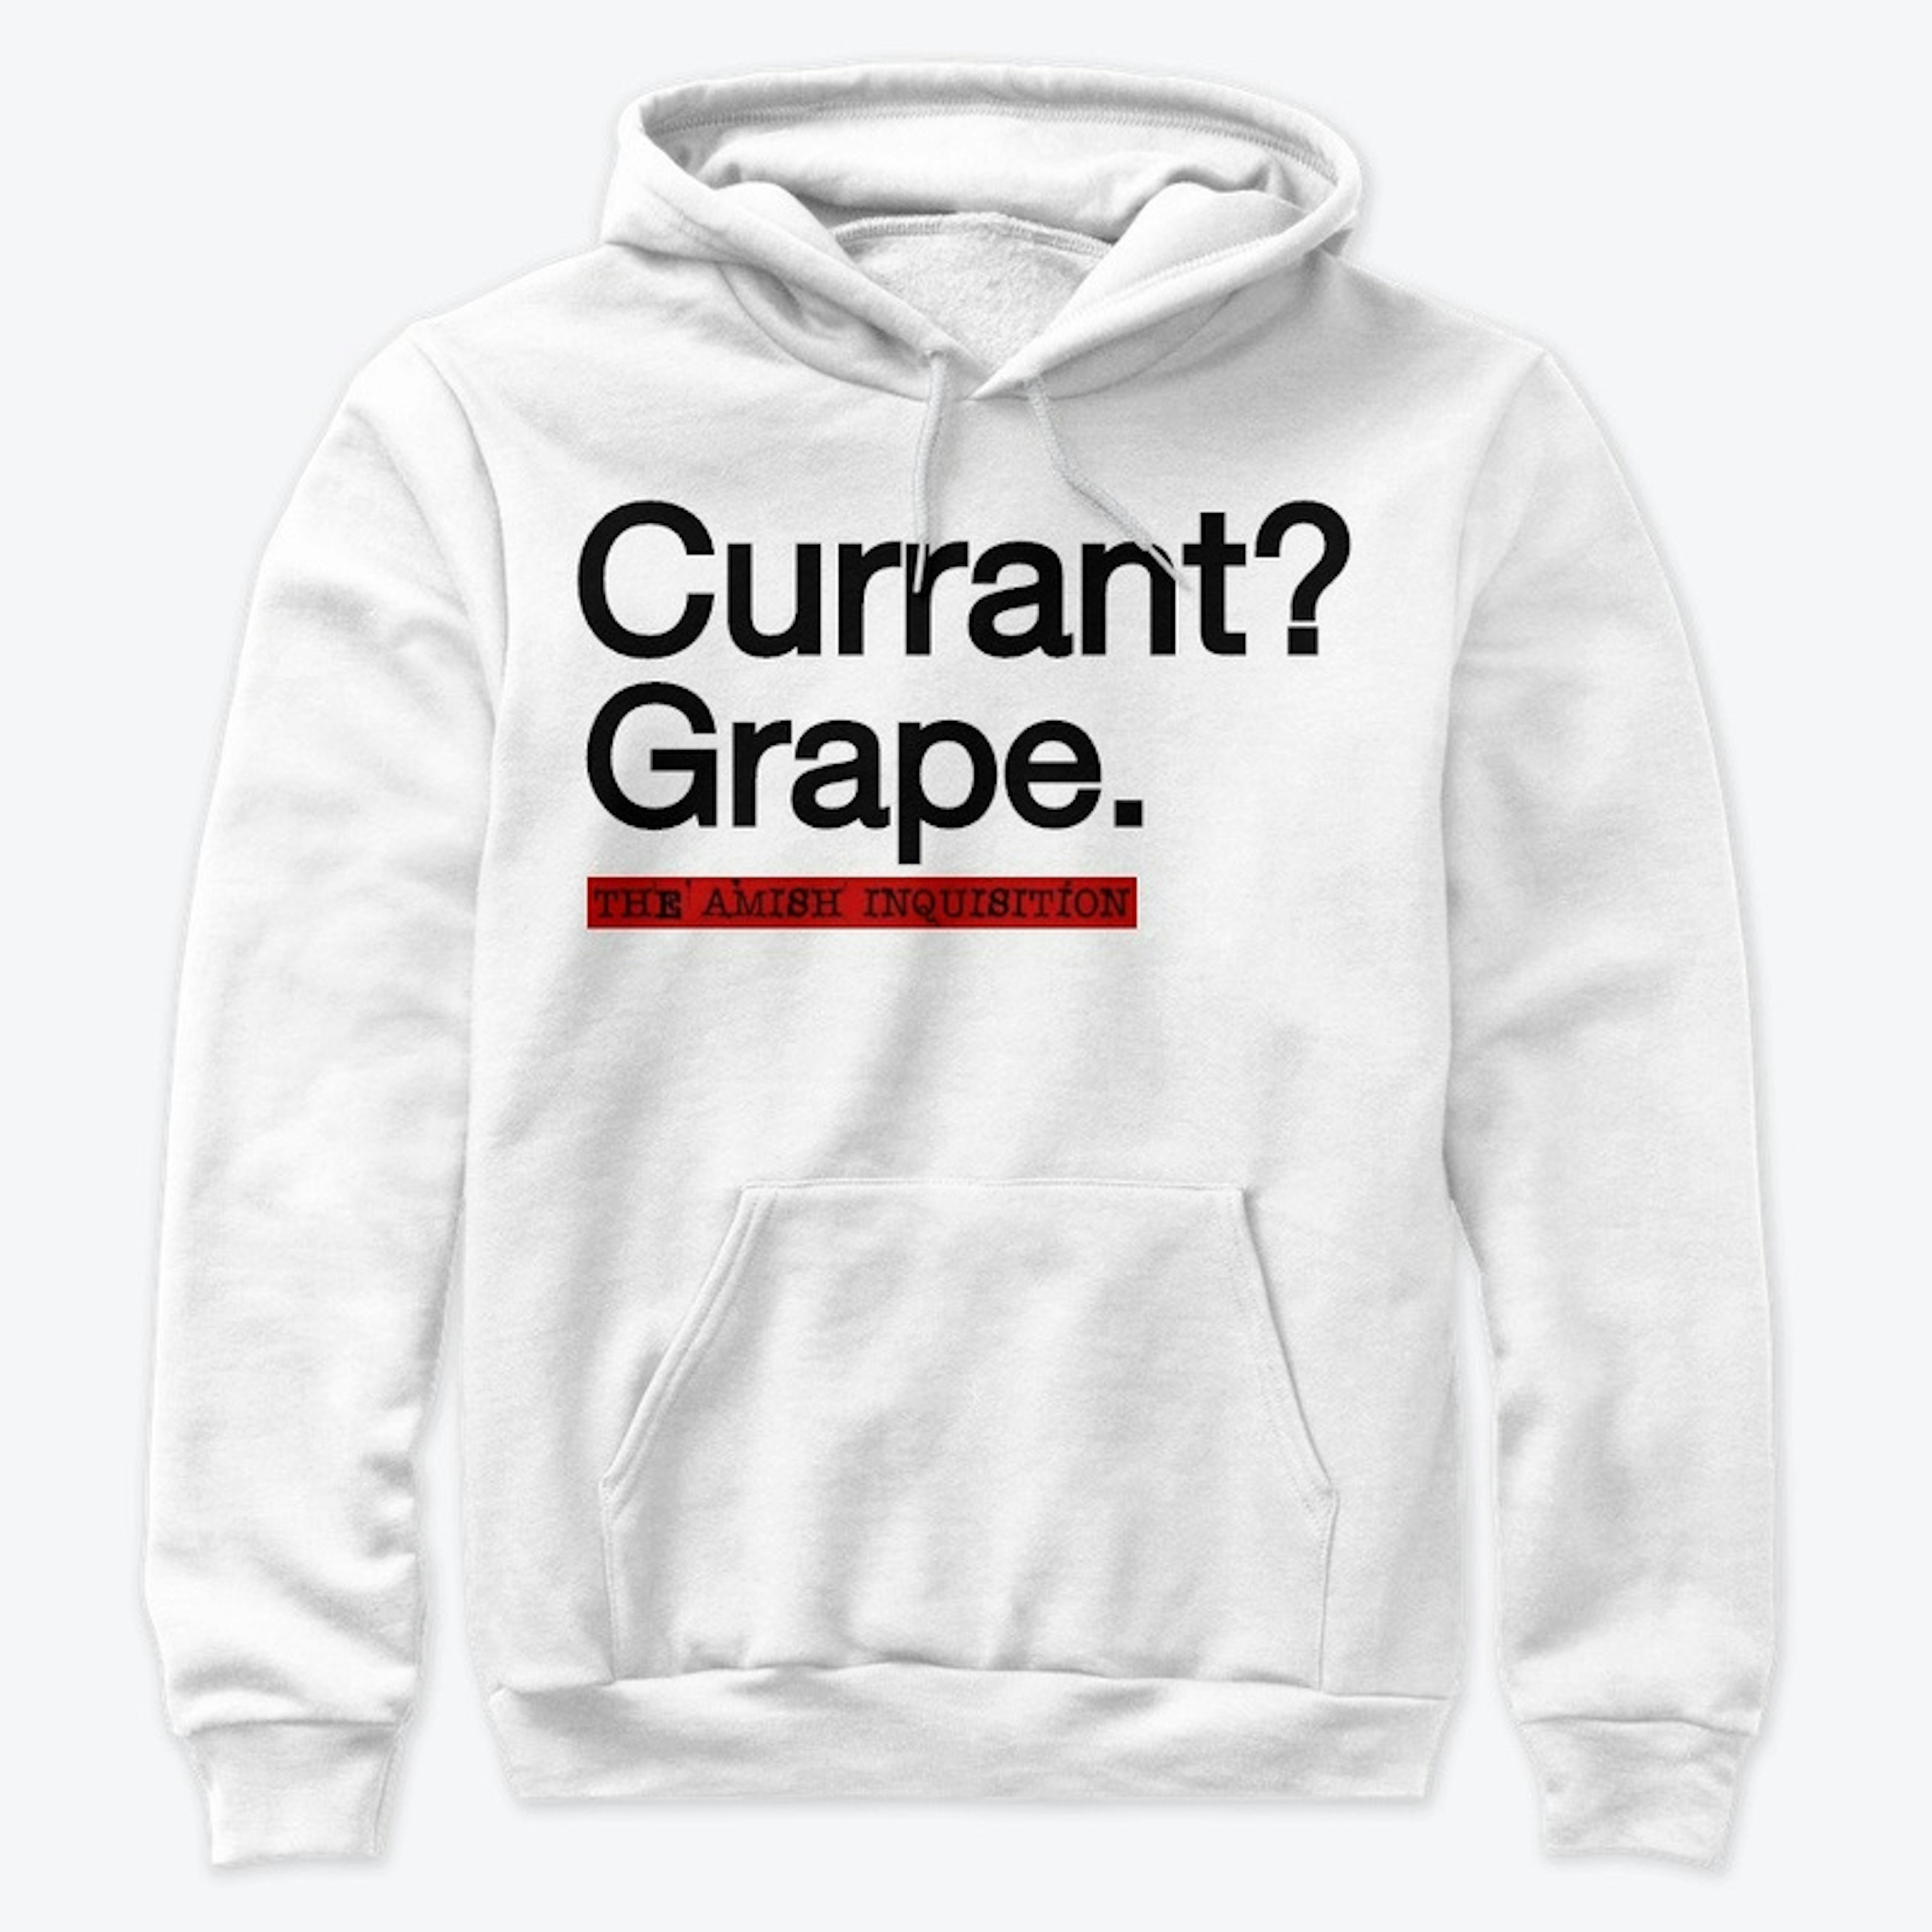 Currant? Grape.